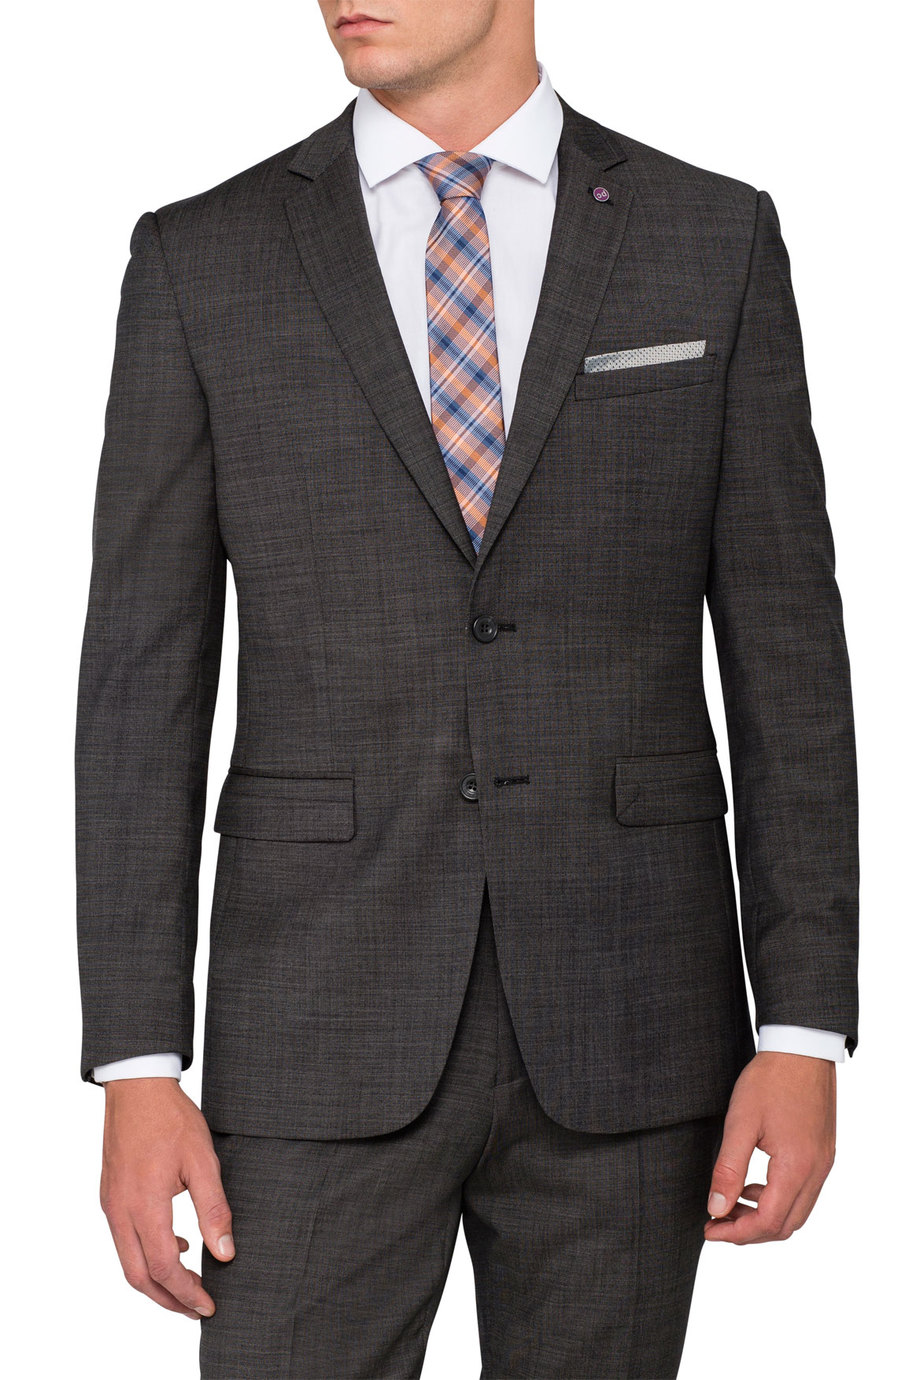 Mens Suits | Pierre Cardin Suits Charcoal Suit | Save up to 25%